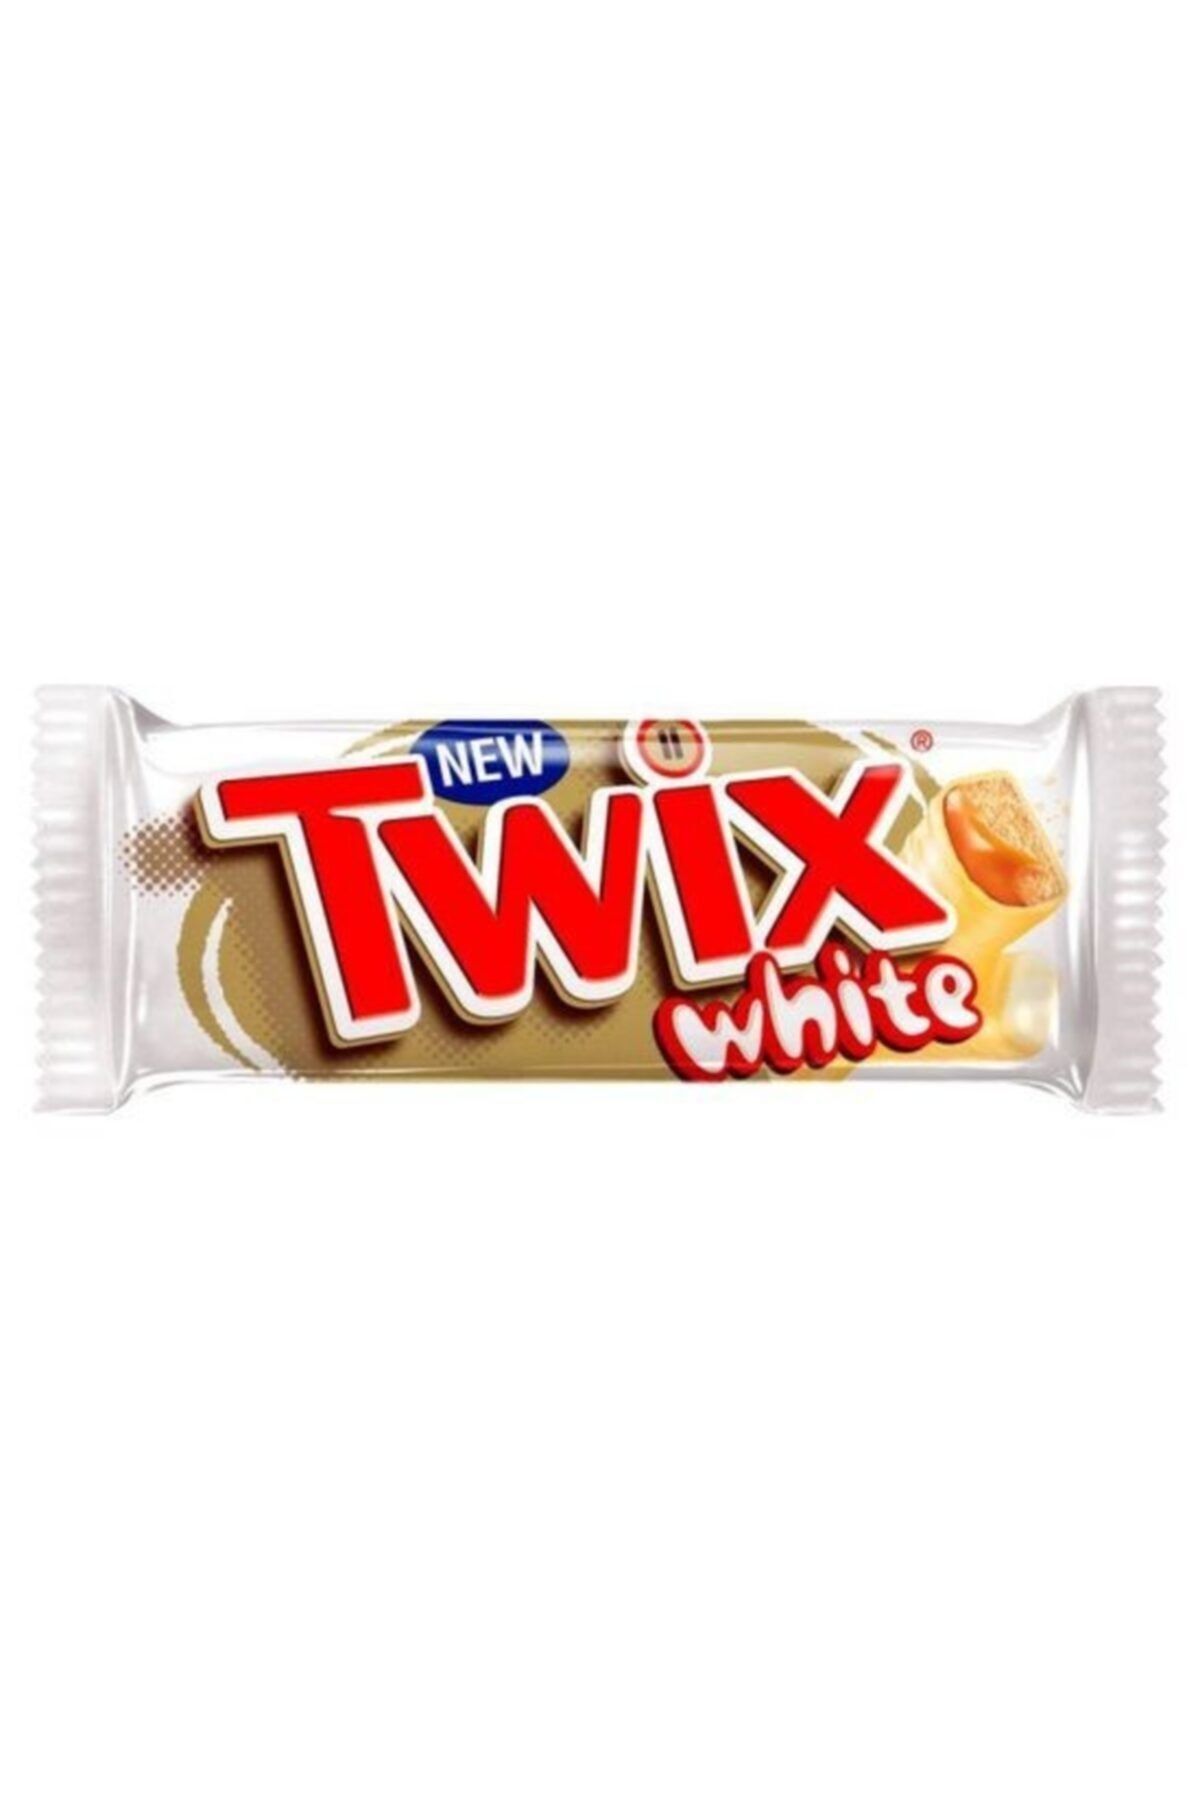 Twix White 2x23g =46gr